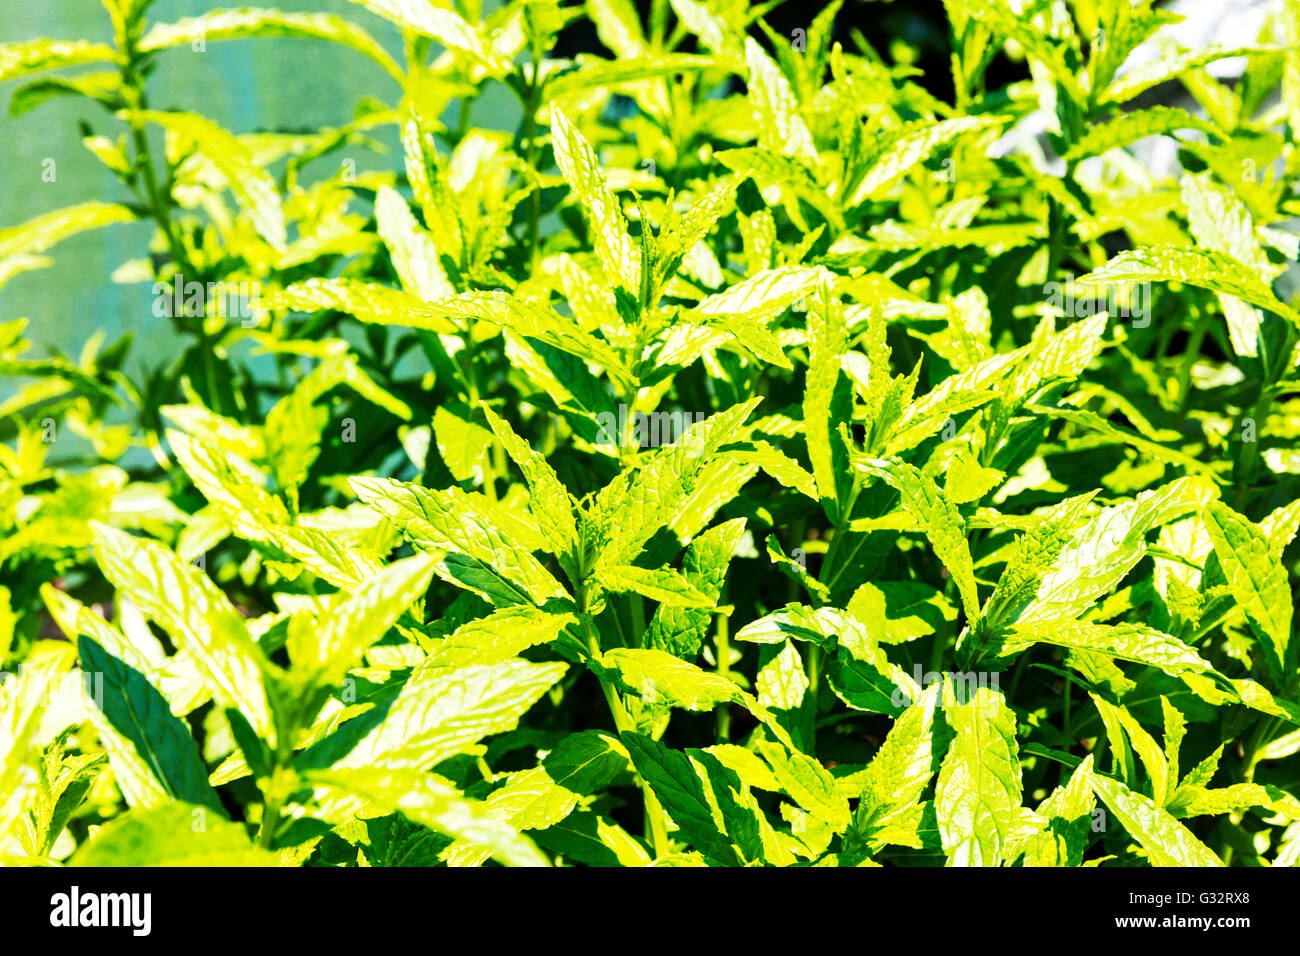 Garden mint plant Mentha sachalinensis herb plants food flavouring flavour flavor flavoring Stock Photo